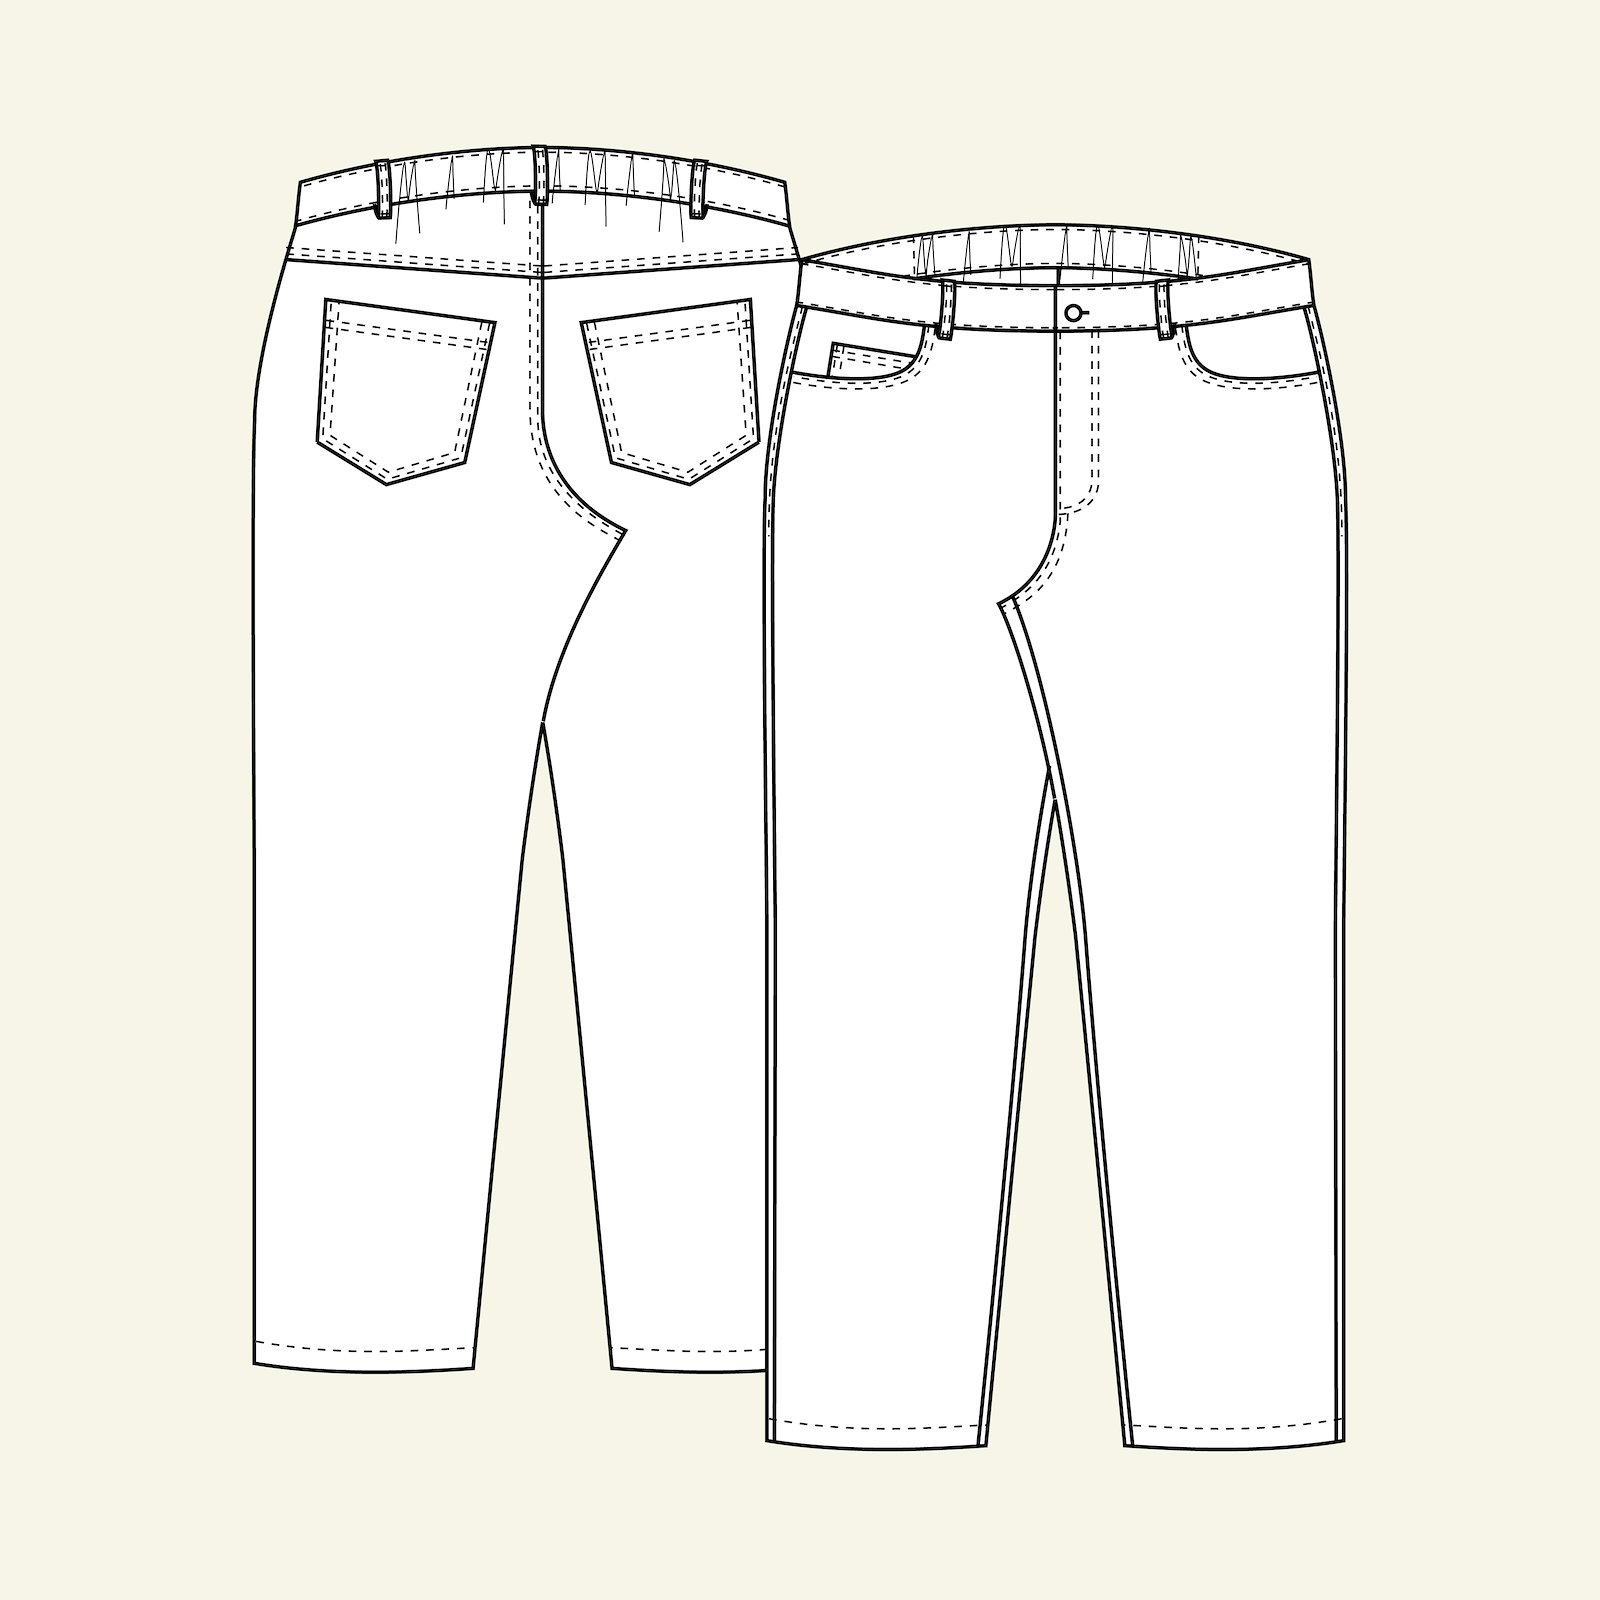 Klassisch Jeans mit Gummiband hinter, 60 p70007000_p70007001_p70007002_p70007003_p70007004_pack_b